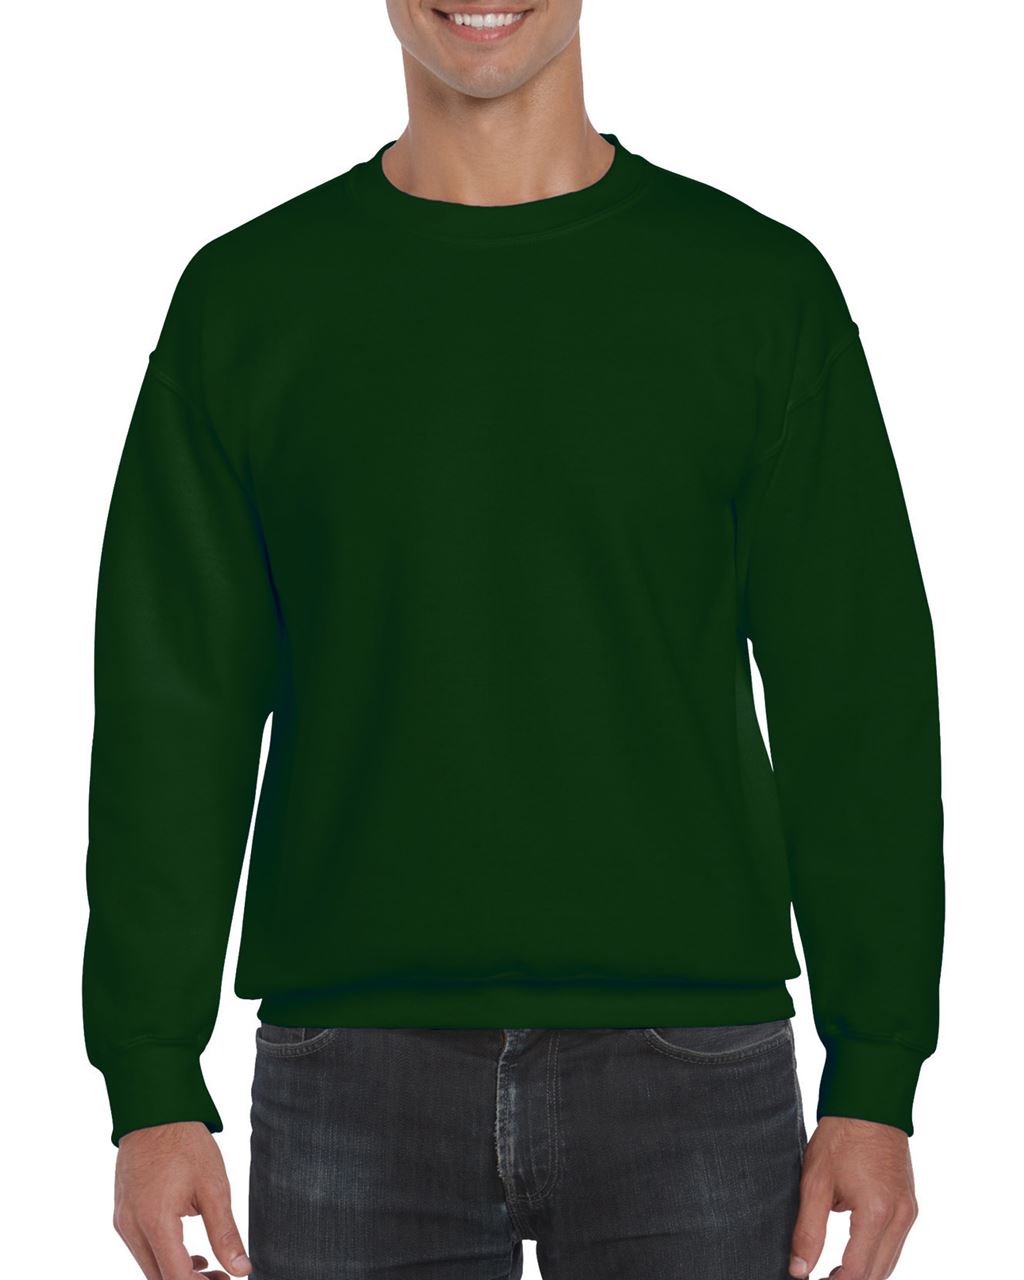 Gildan Dryblend® Adult Crewneck Sweatshirt - Gildan Dryblend® Adult Crewneck Sweatshirt - Forest Green